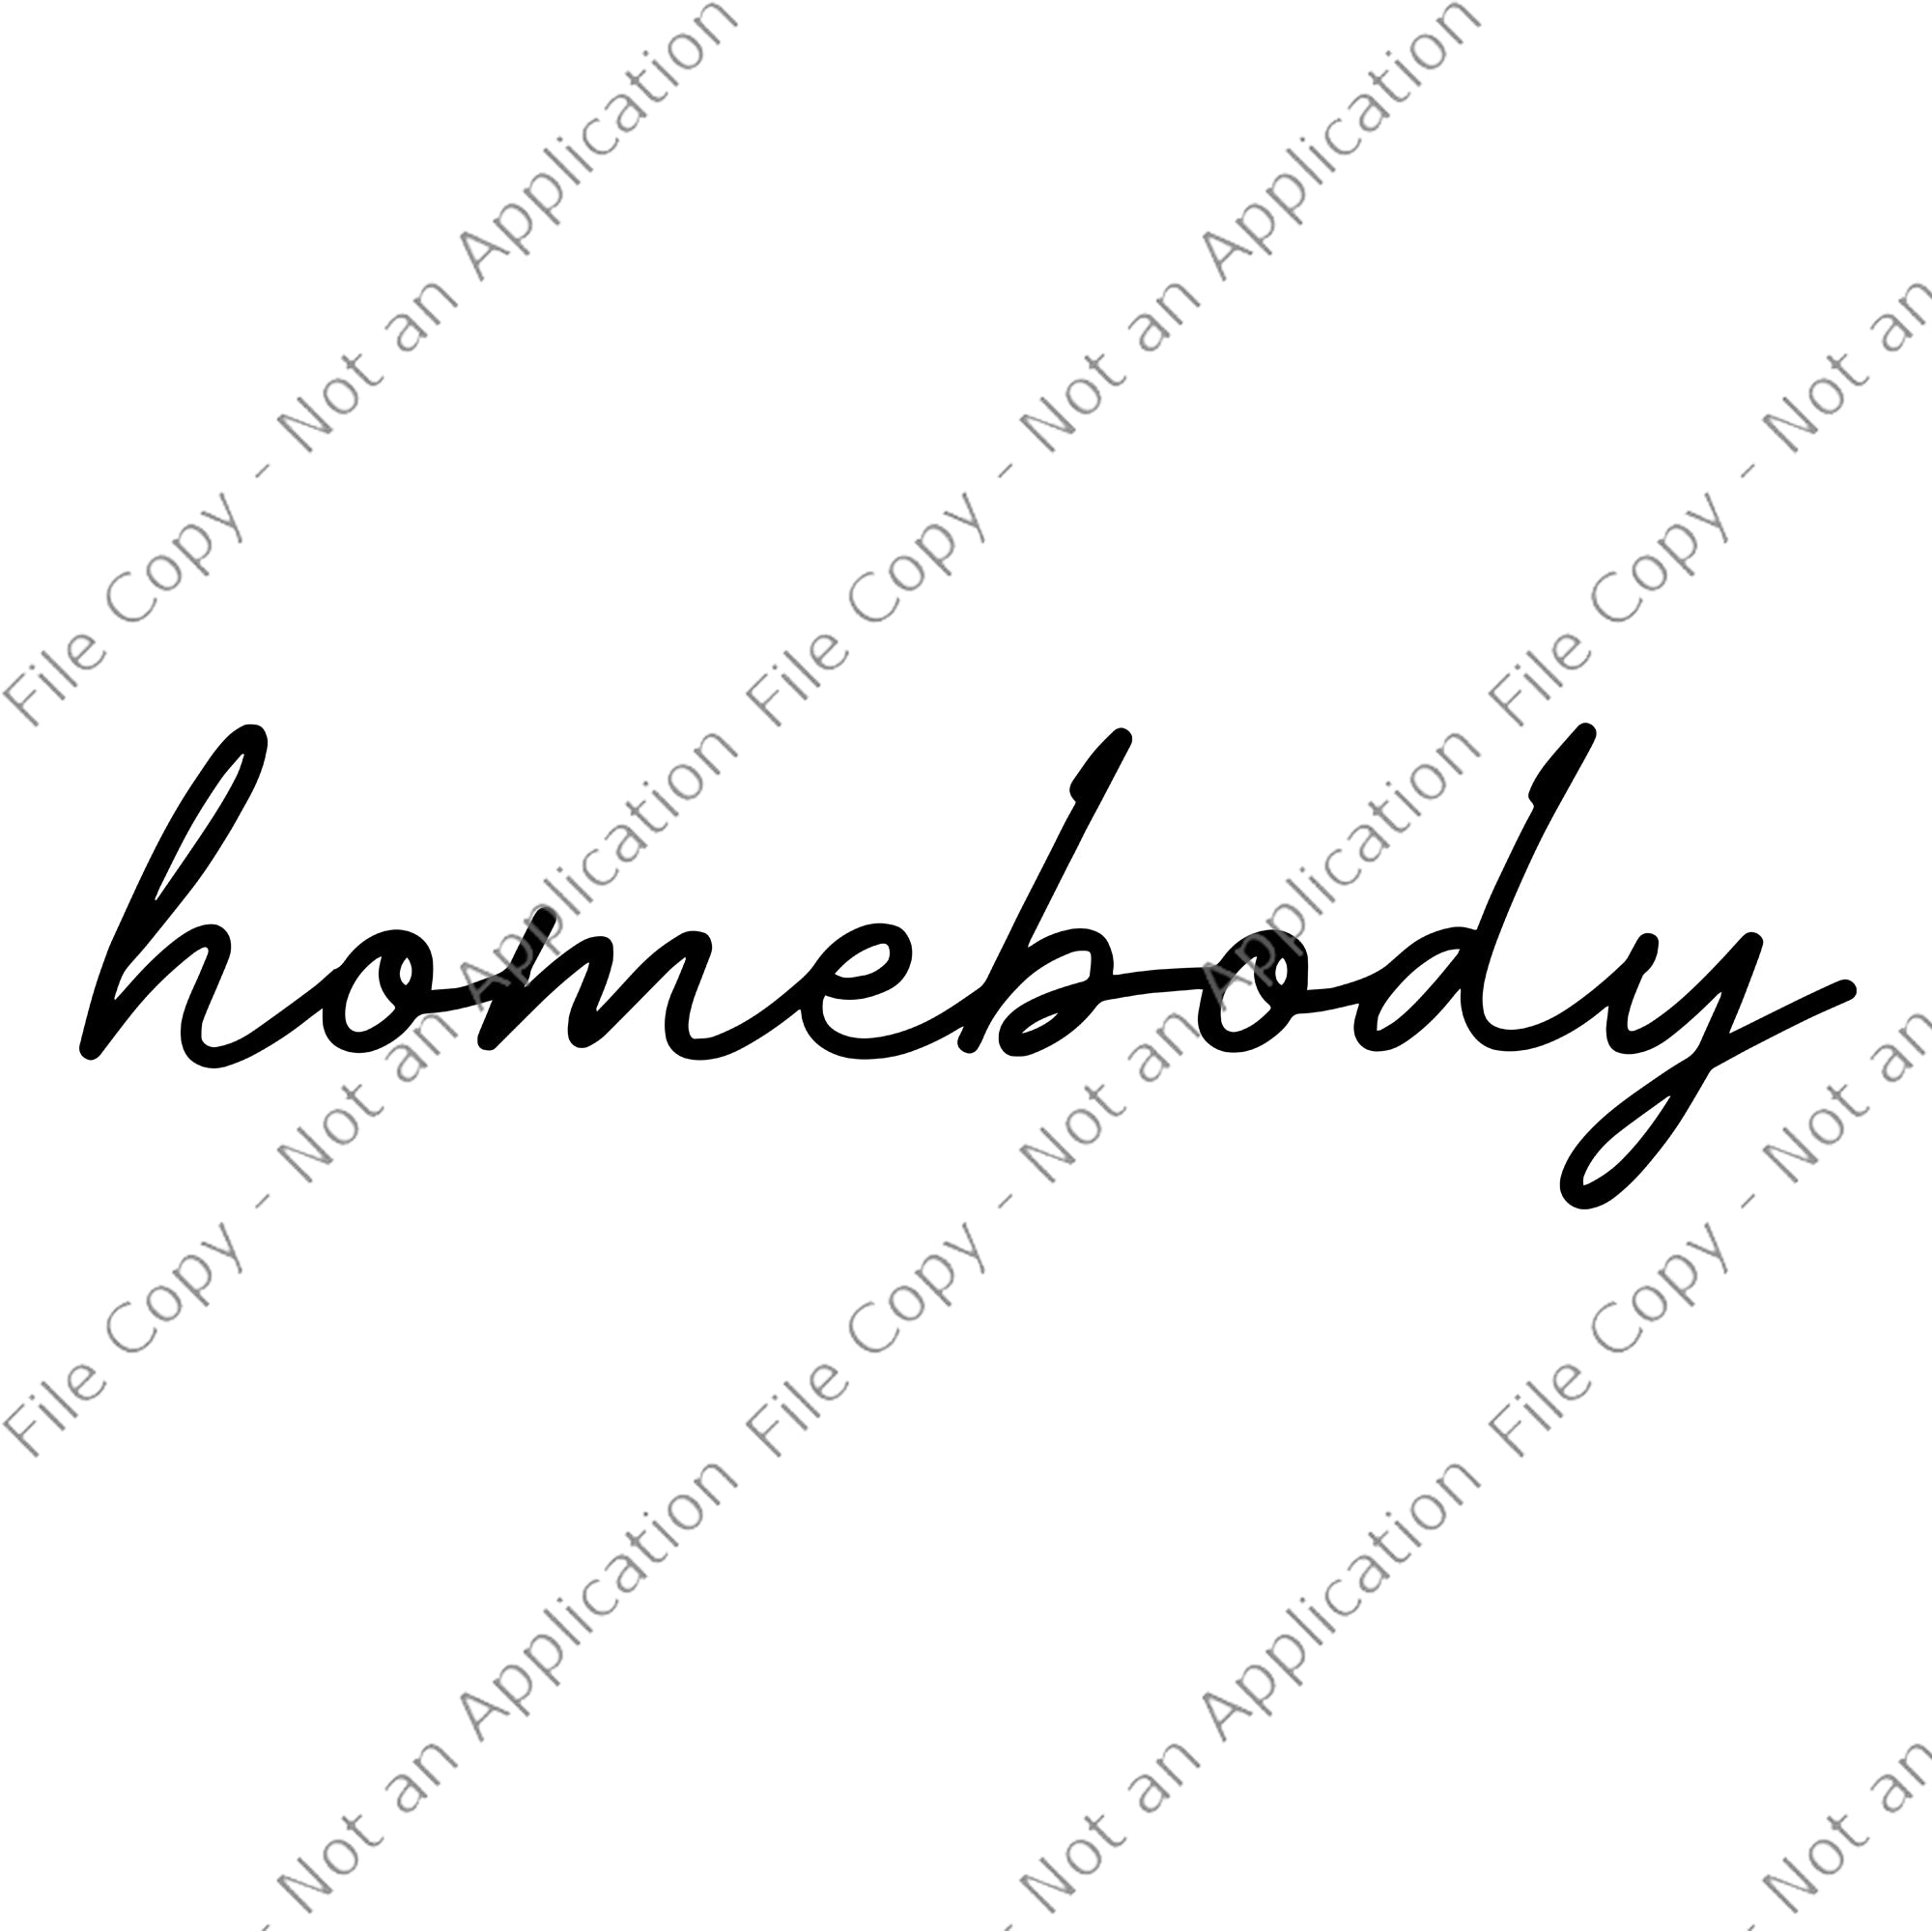 Homebody SVG, Weekend SVG, Homebody png, Homebody